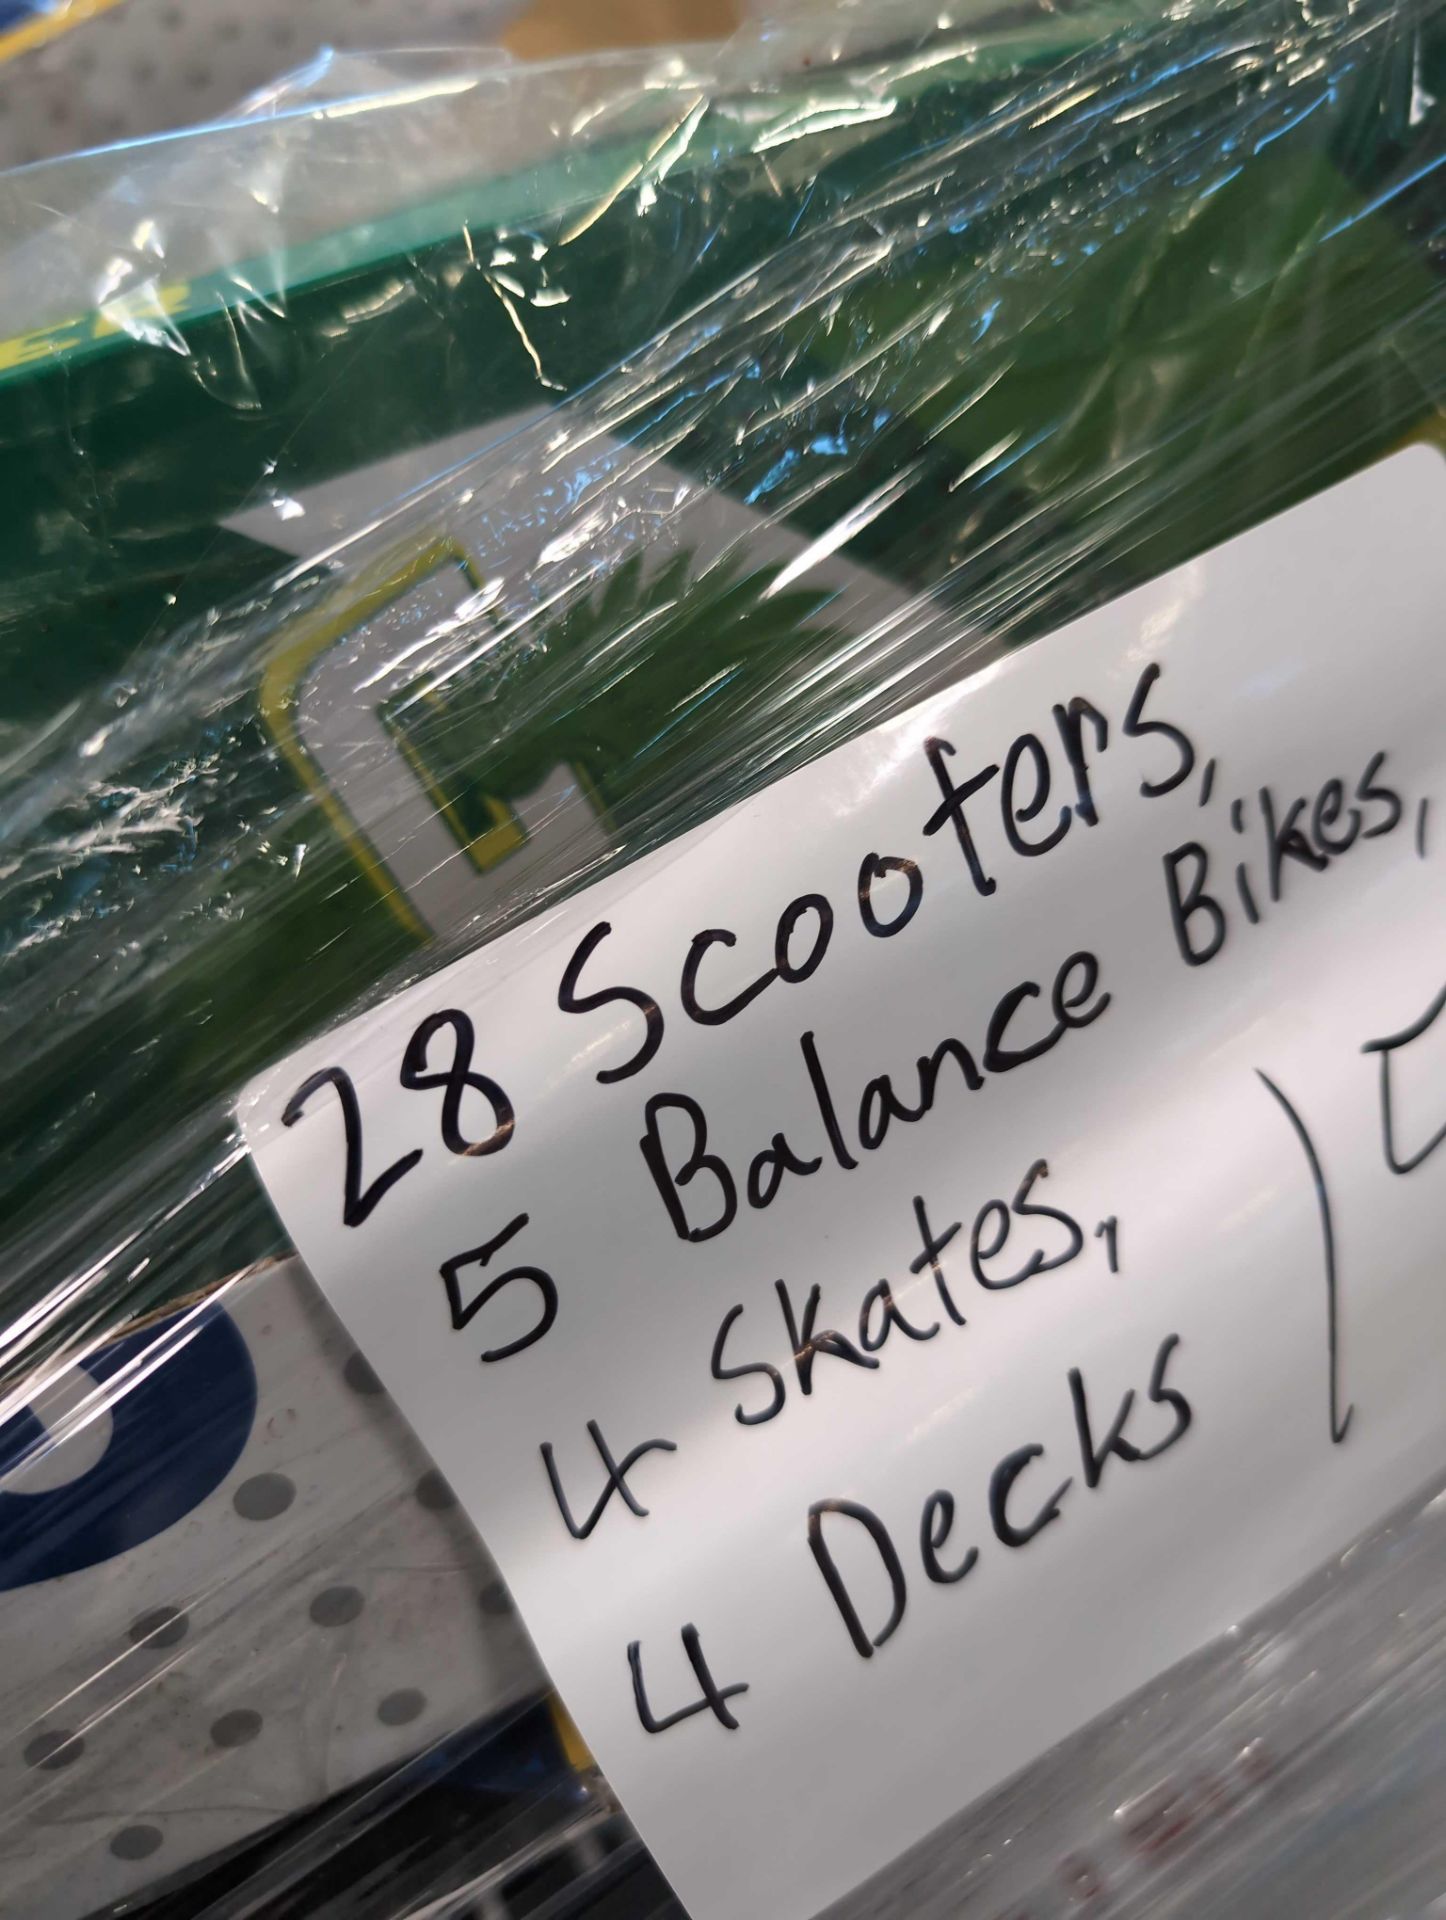 28 Scooters 5 Balance Bikes, 4 Skates, 4 Decks - Image 3 of 8